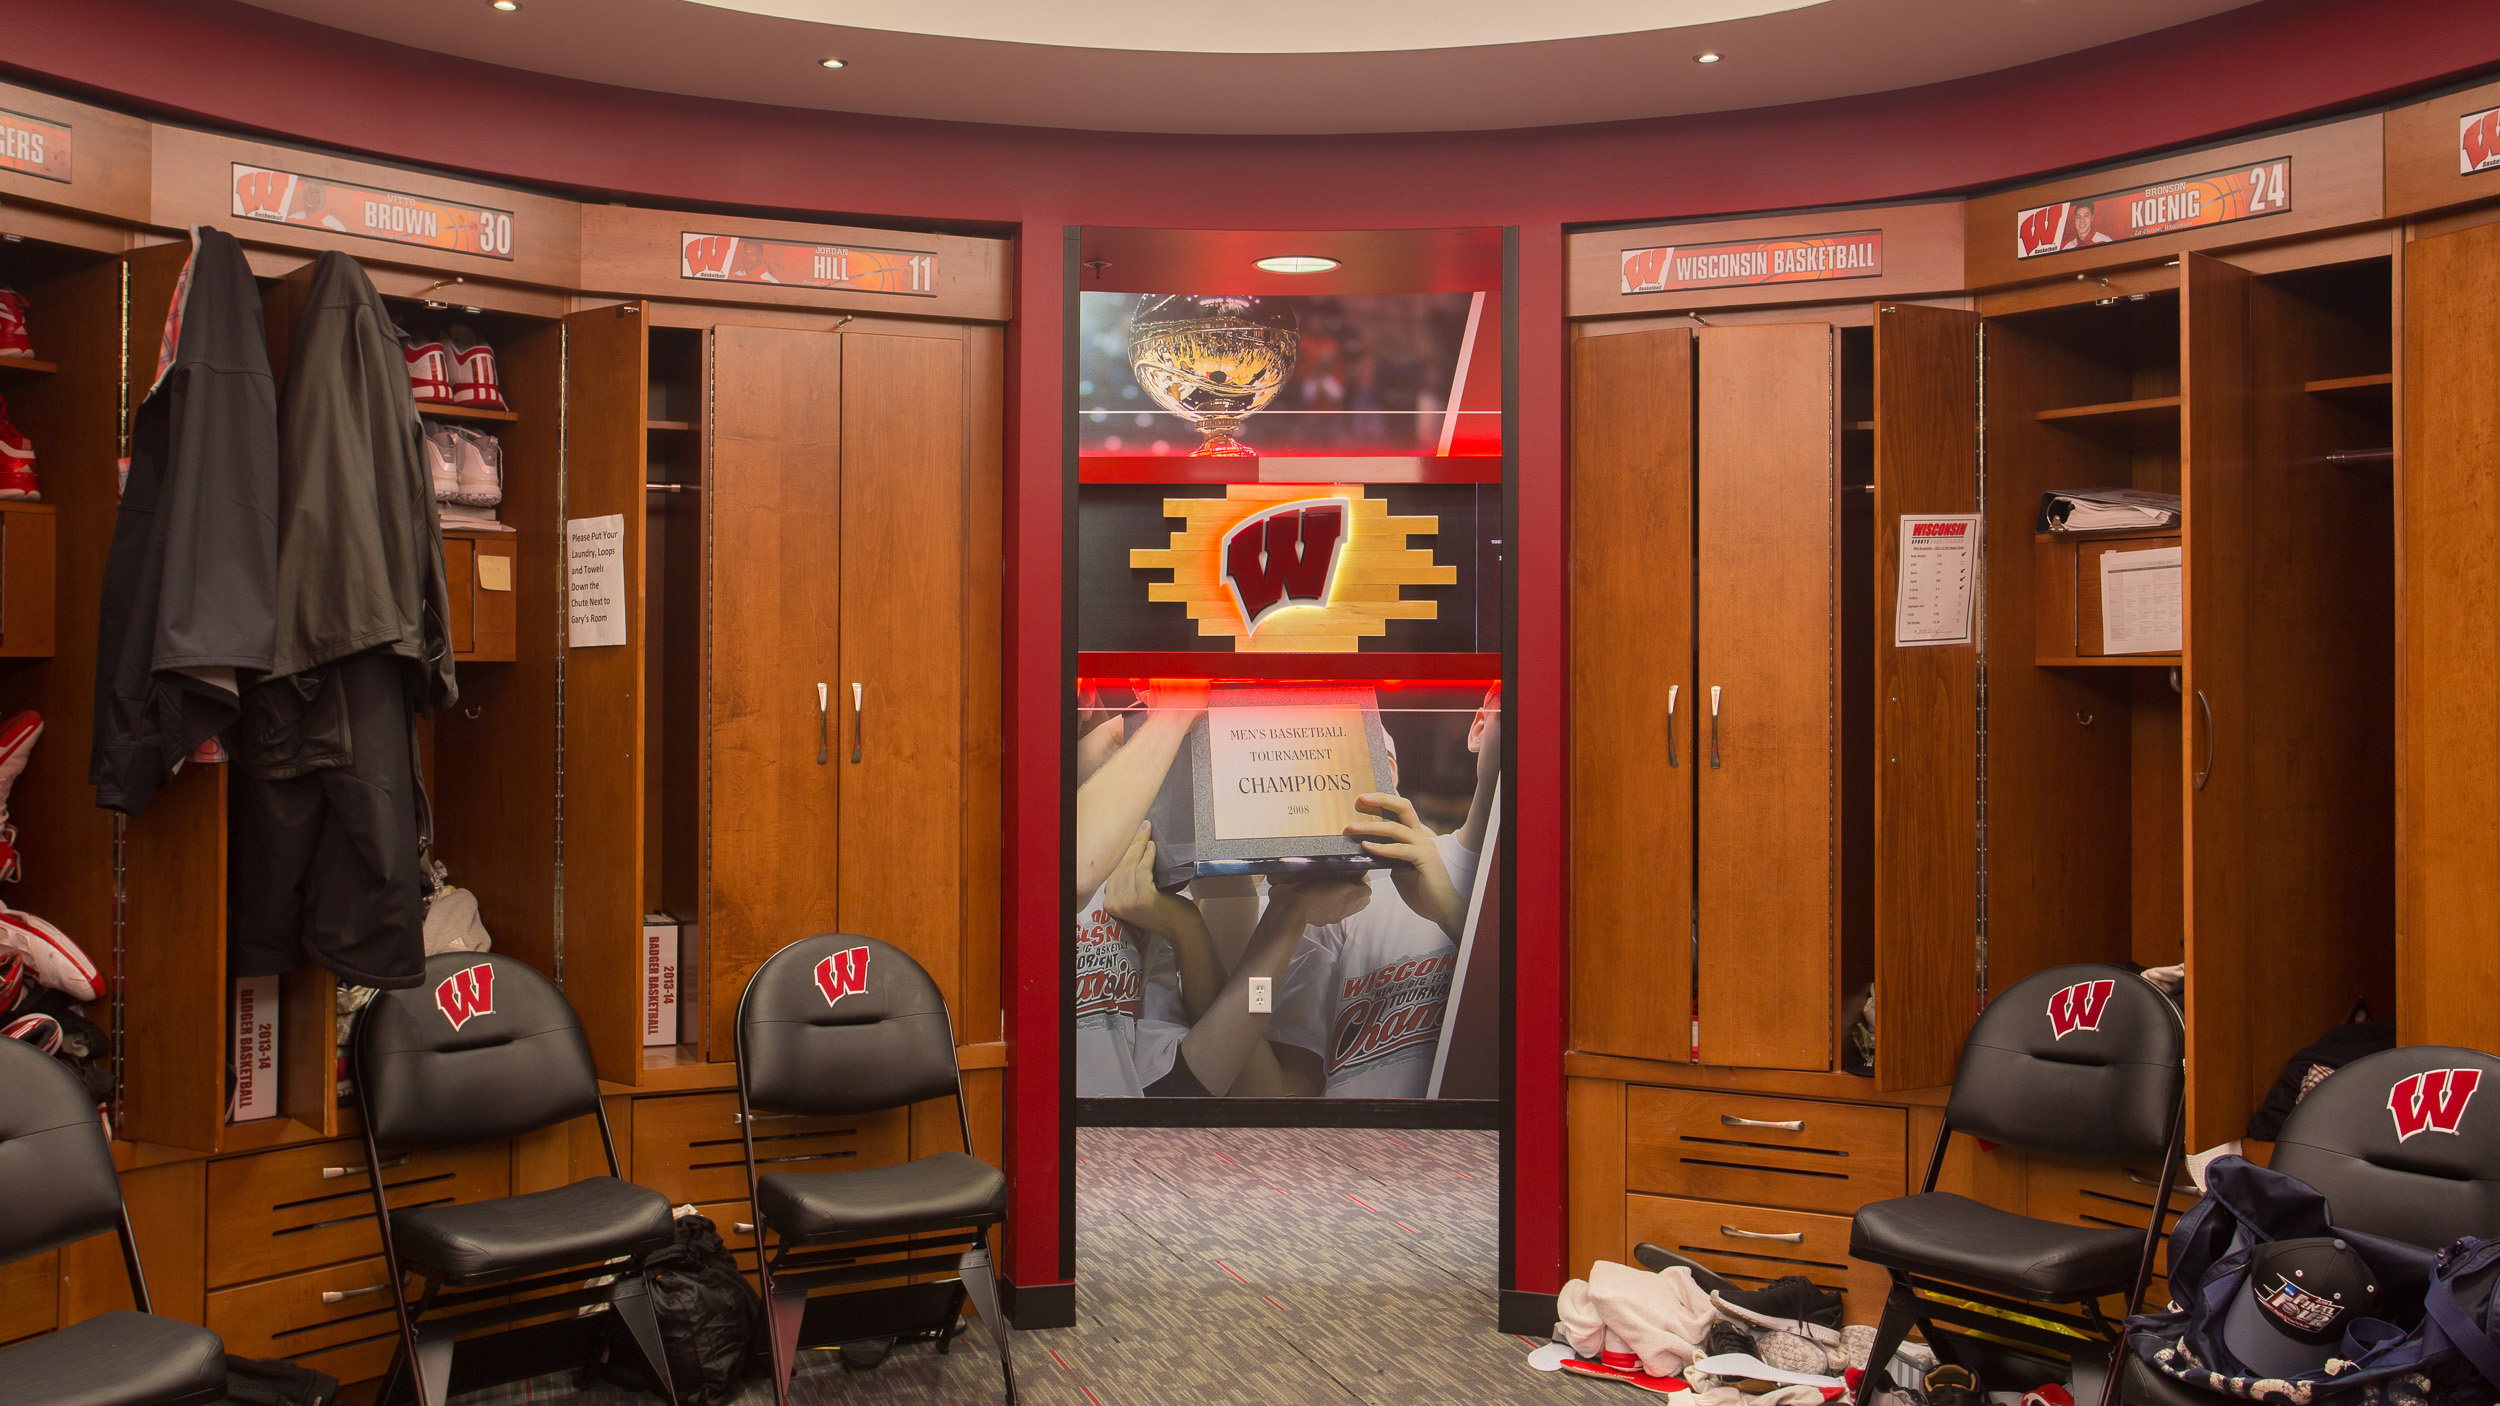 University of Wisconsin - Basketball Locker Room Facility Branding